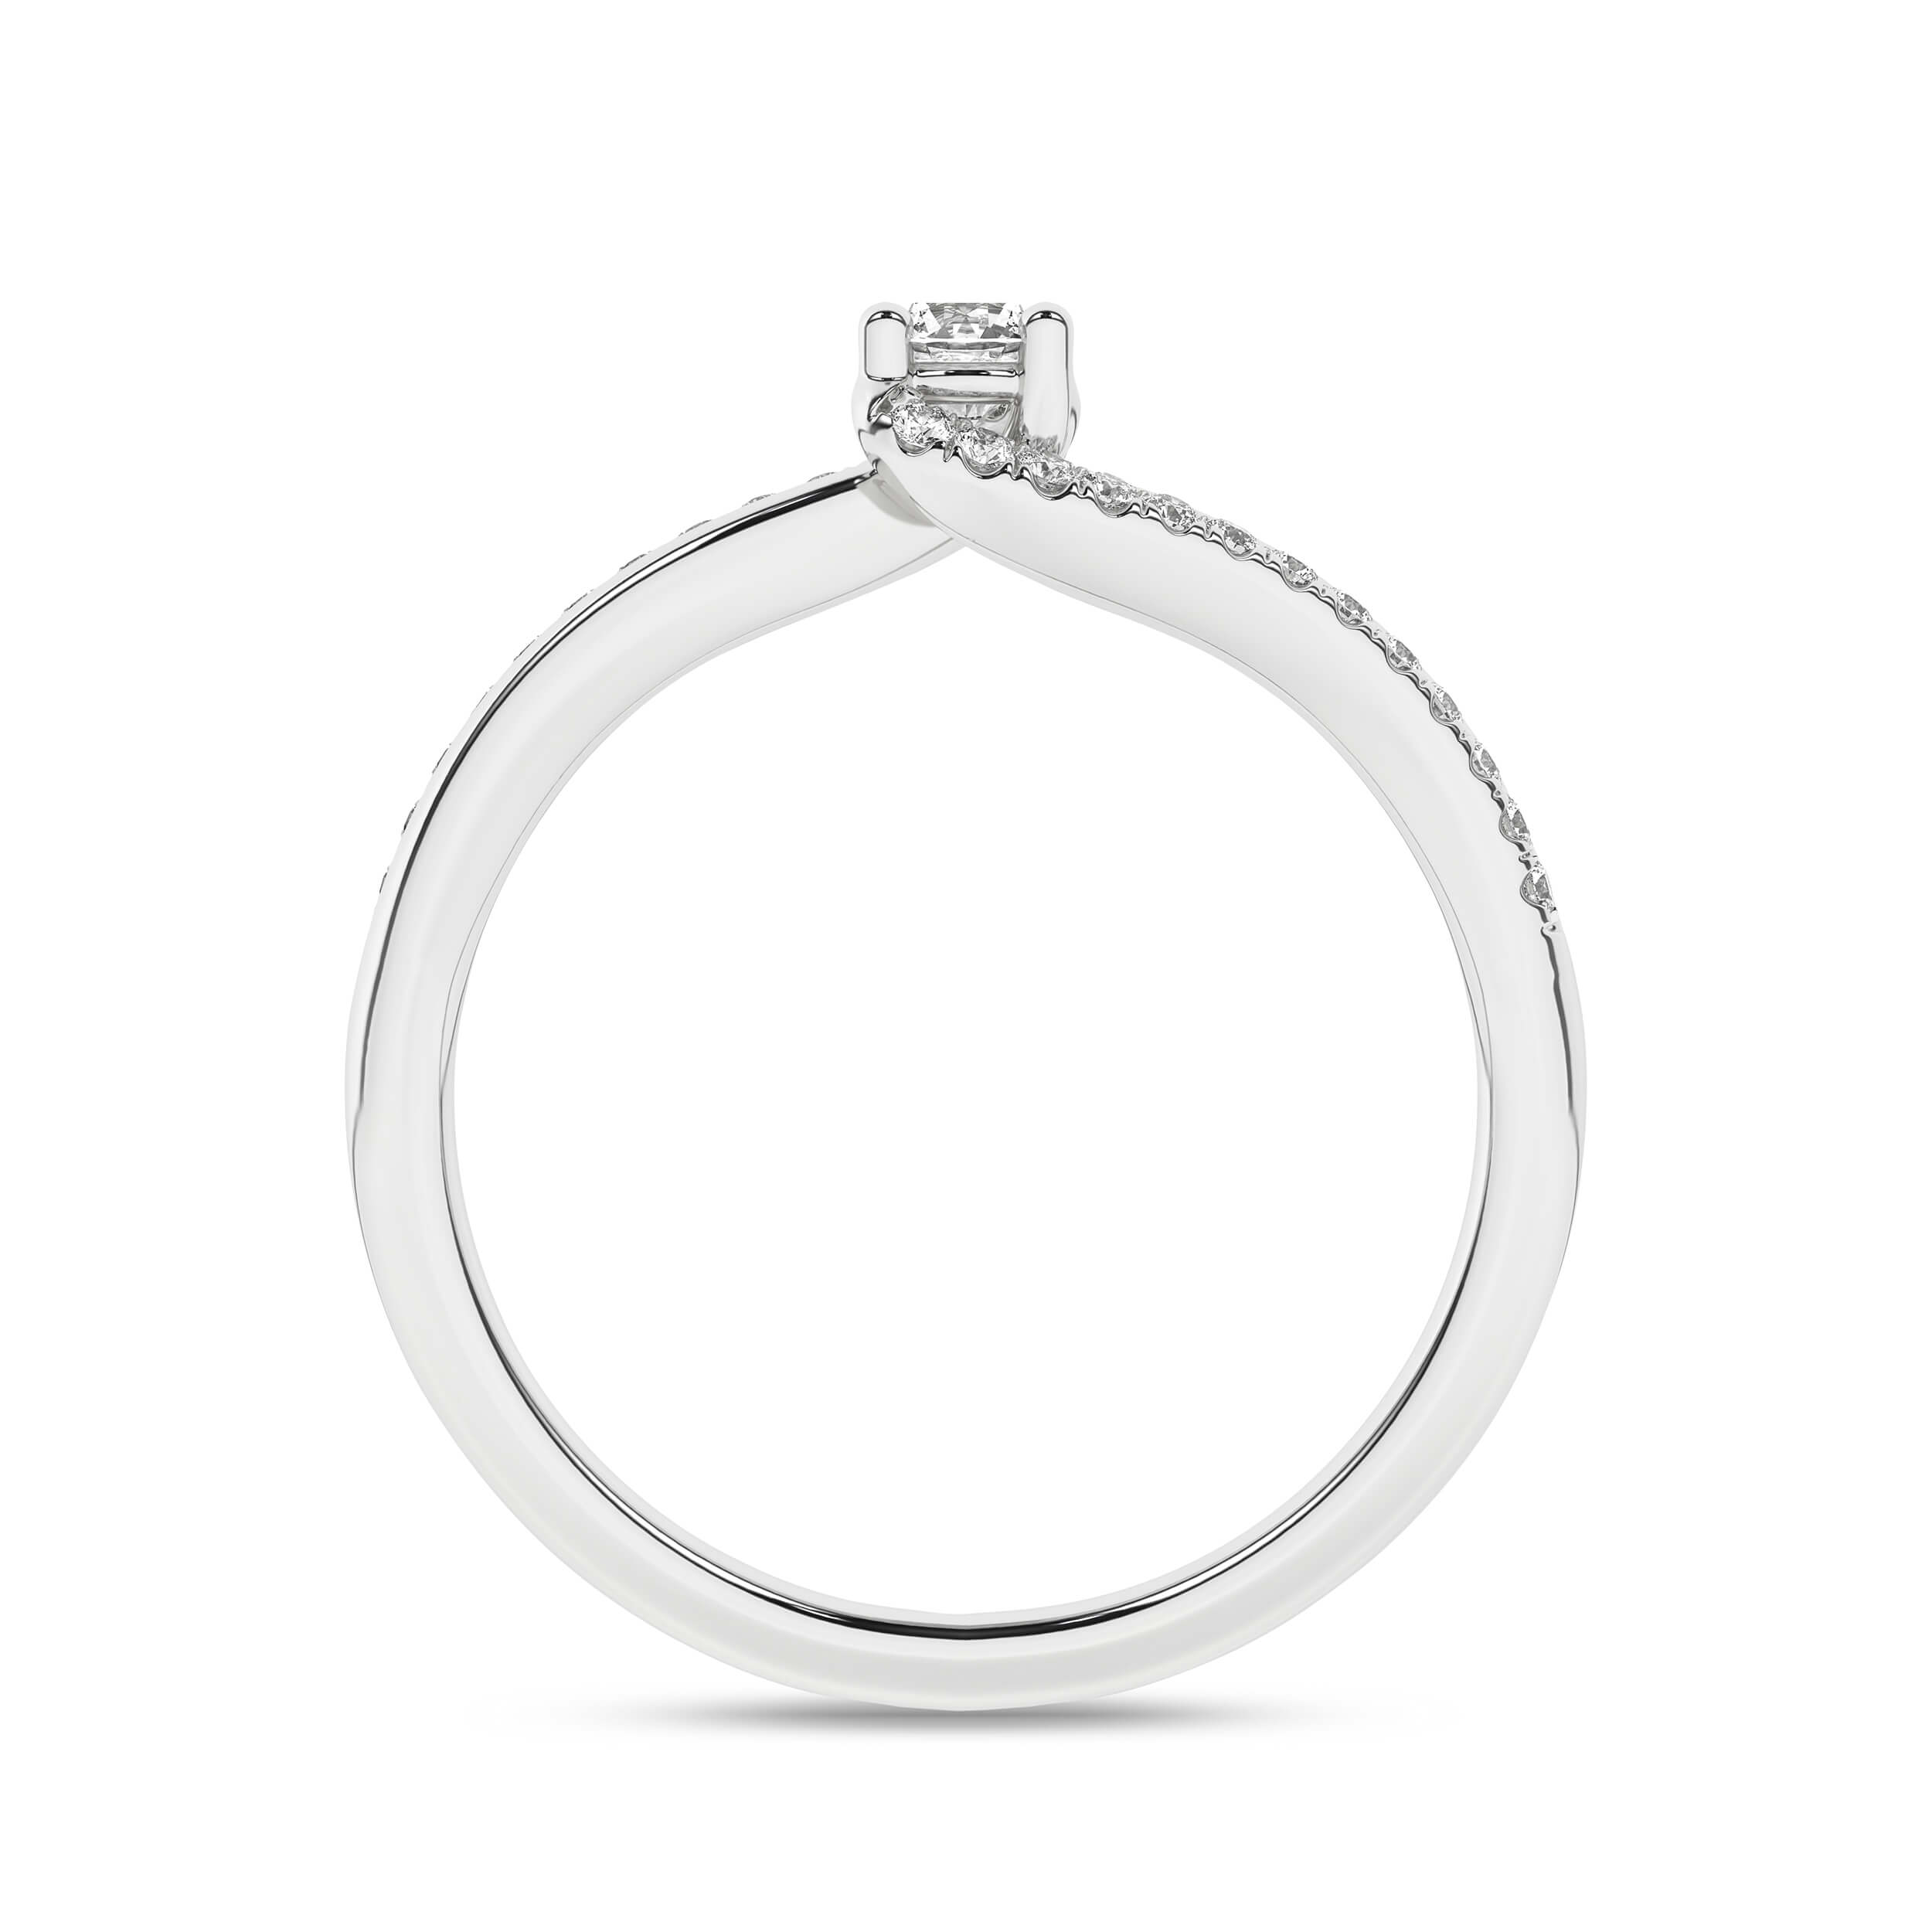 Inel de logodna din Aur Alb 14K cu Diamante 0.25Ct, articol RB17788EG, previzualizare foto 3